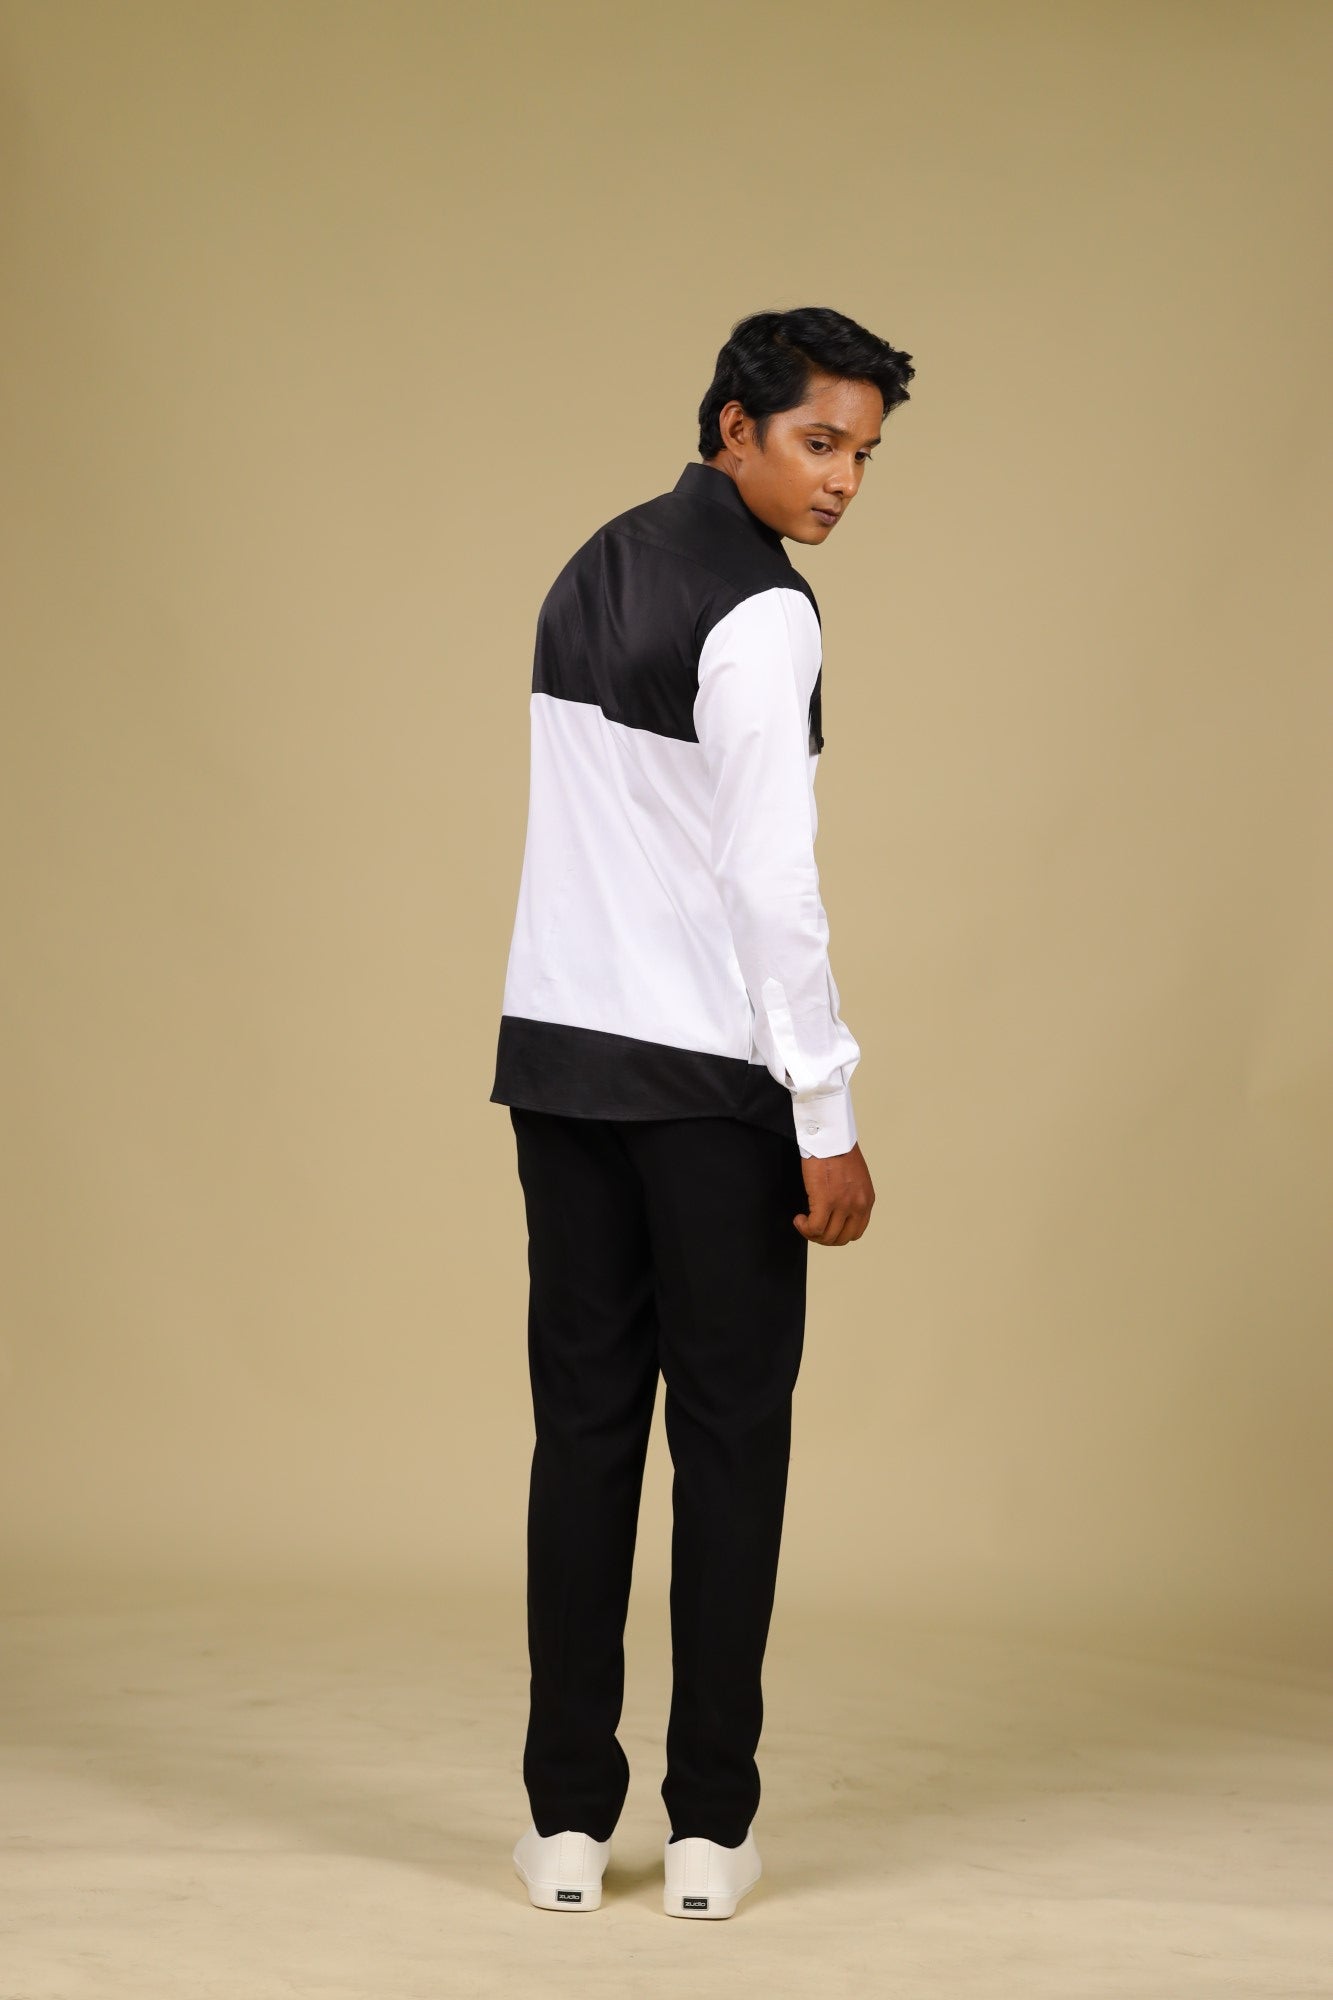 Men's Black & White Color Blant Croma Shirt Full Sleeves Casual Shirt - Hilo Design